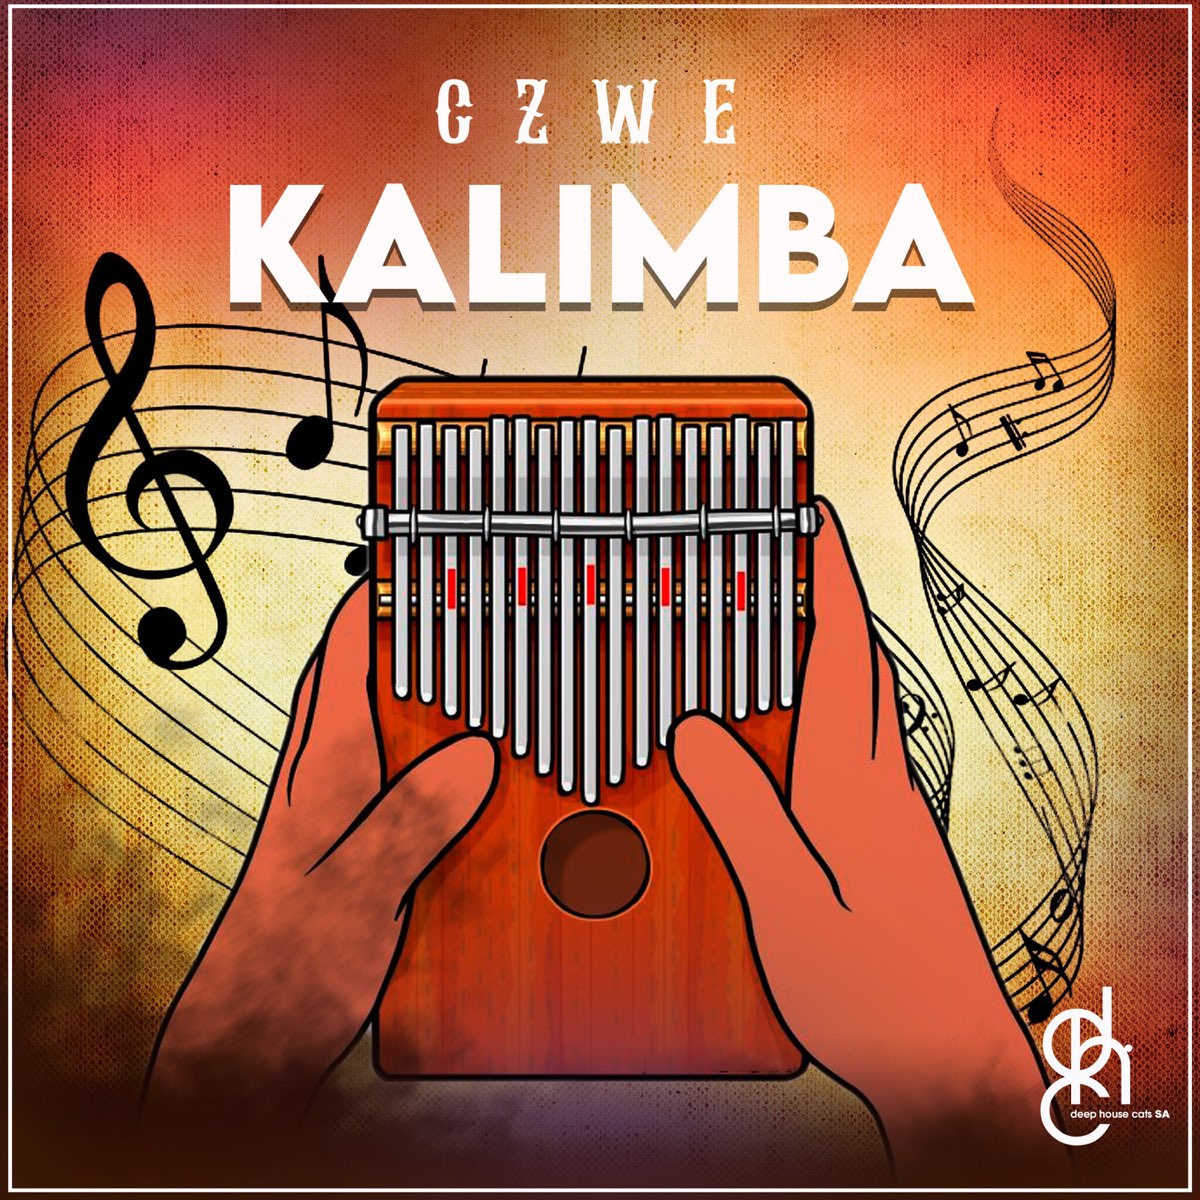 Kalimba - EP - Album by Czwe - Apple Music